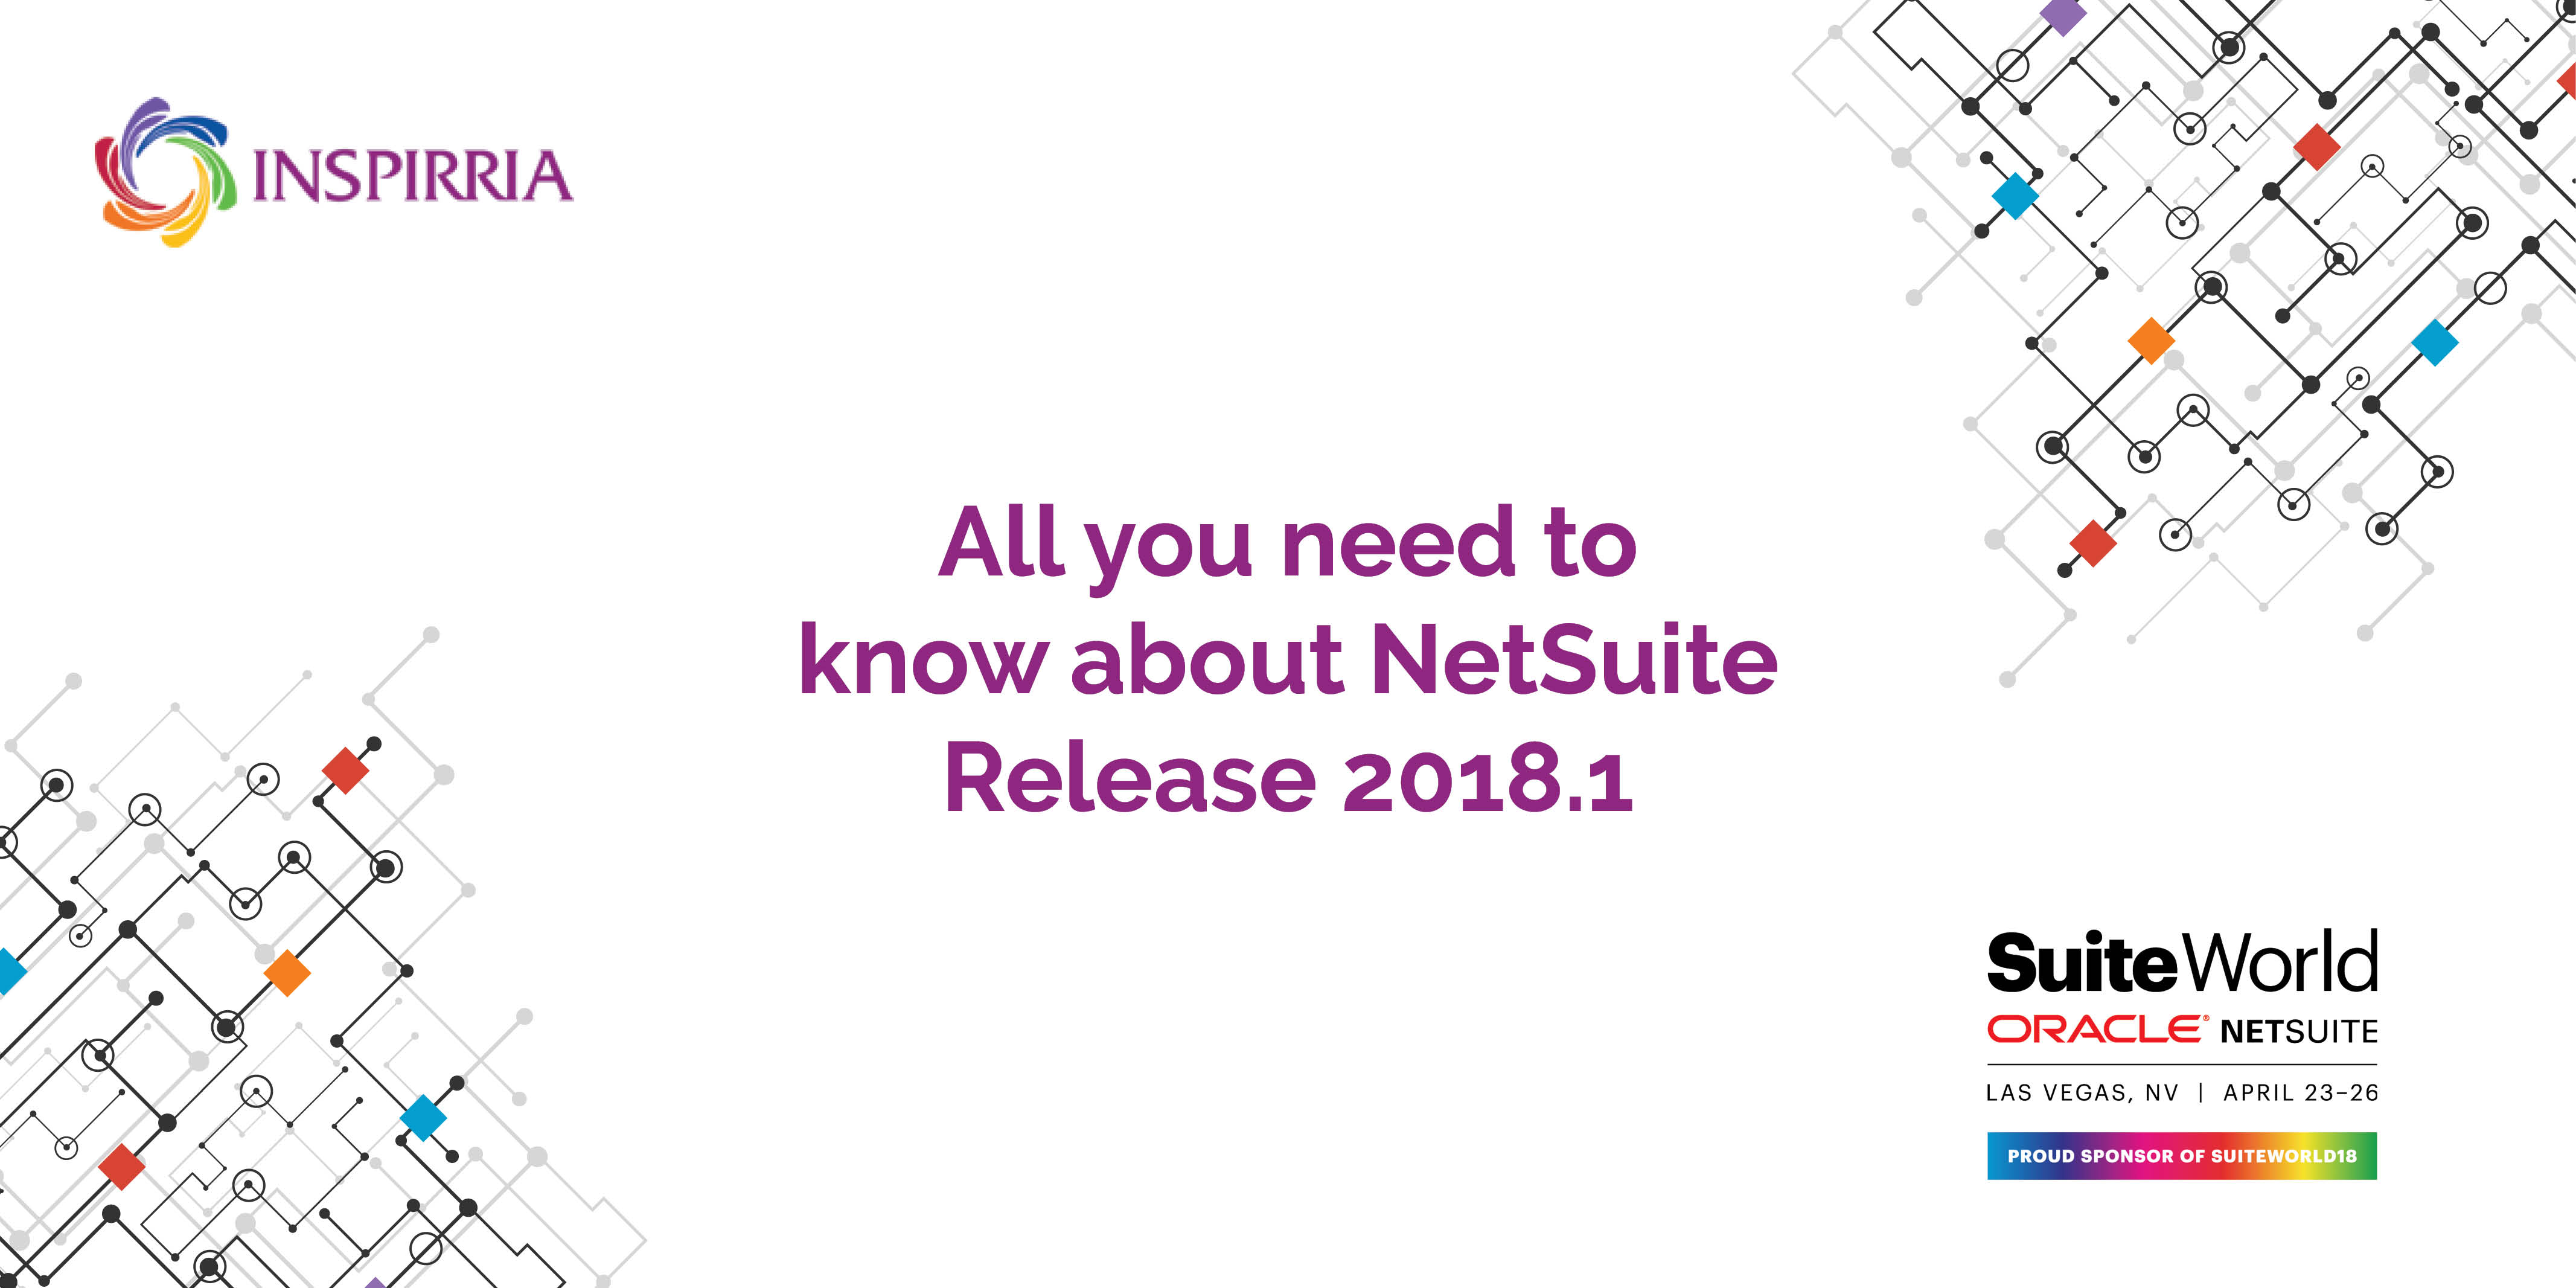 NetSuite Release 2018.1 - Inspirria Cloudtech 